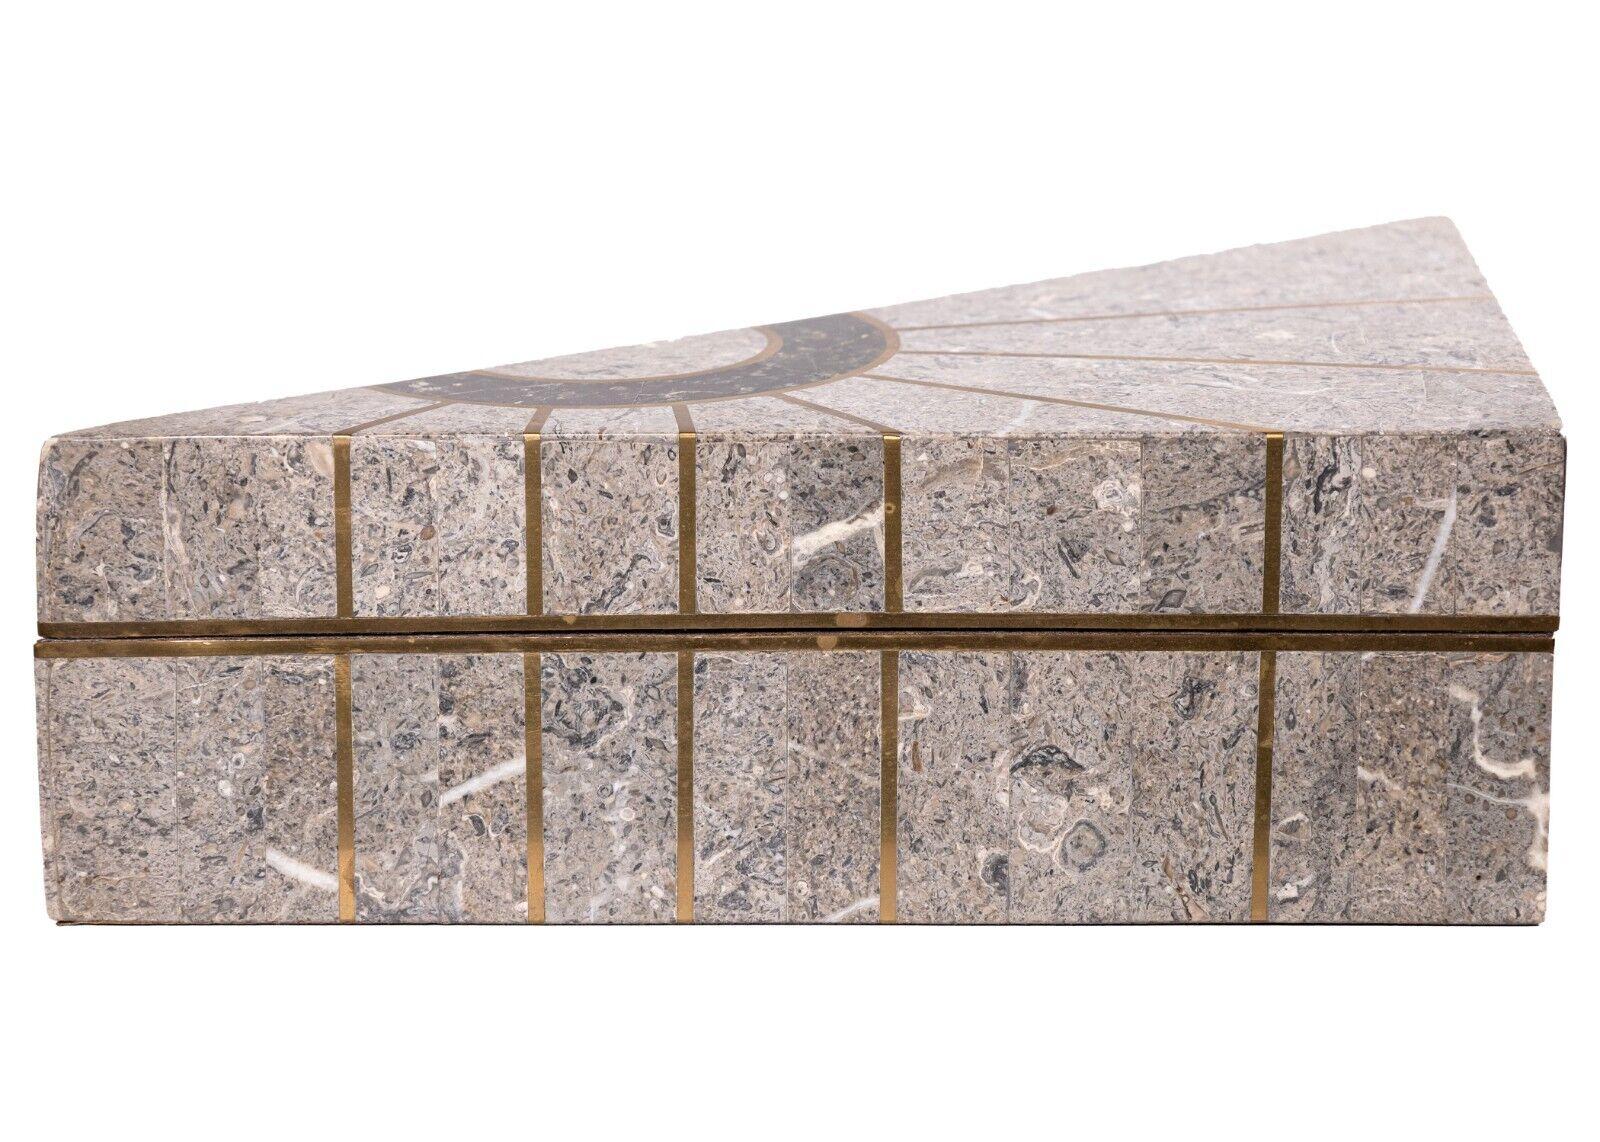 20th Century Maitland Smith Tesselated Stone Triangle Box For Sale